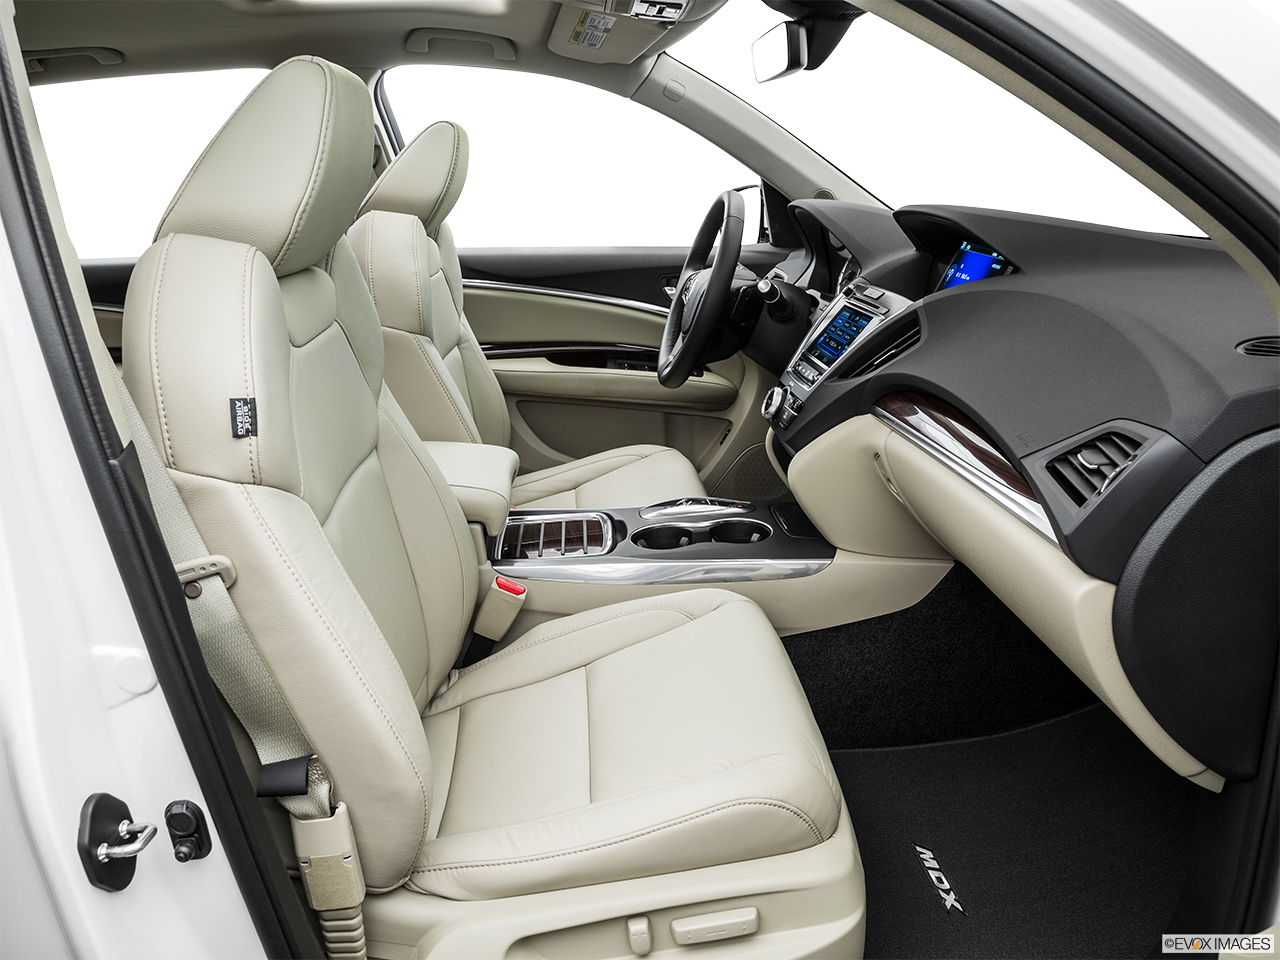 2016 Acura MDX SH-AWD Passenger seat. 